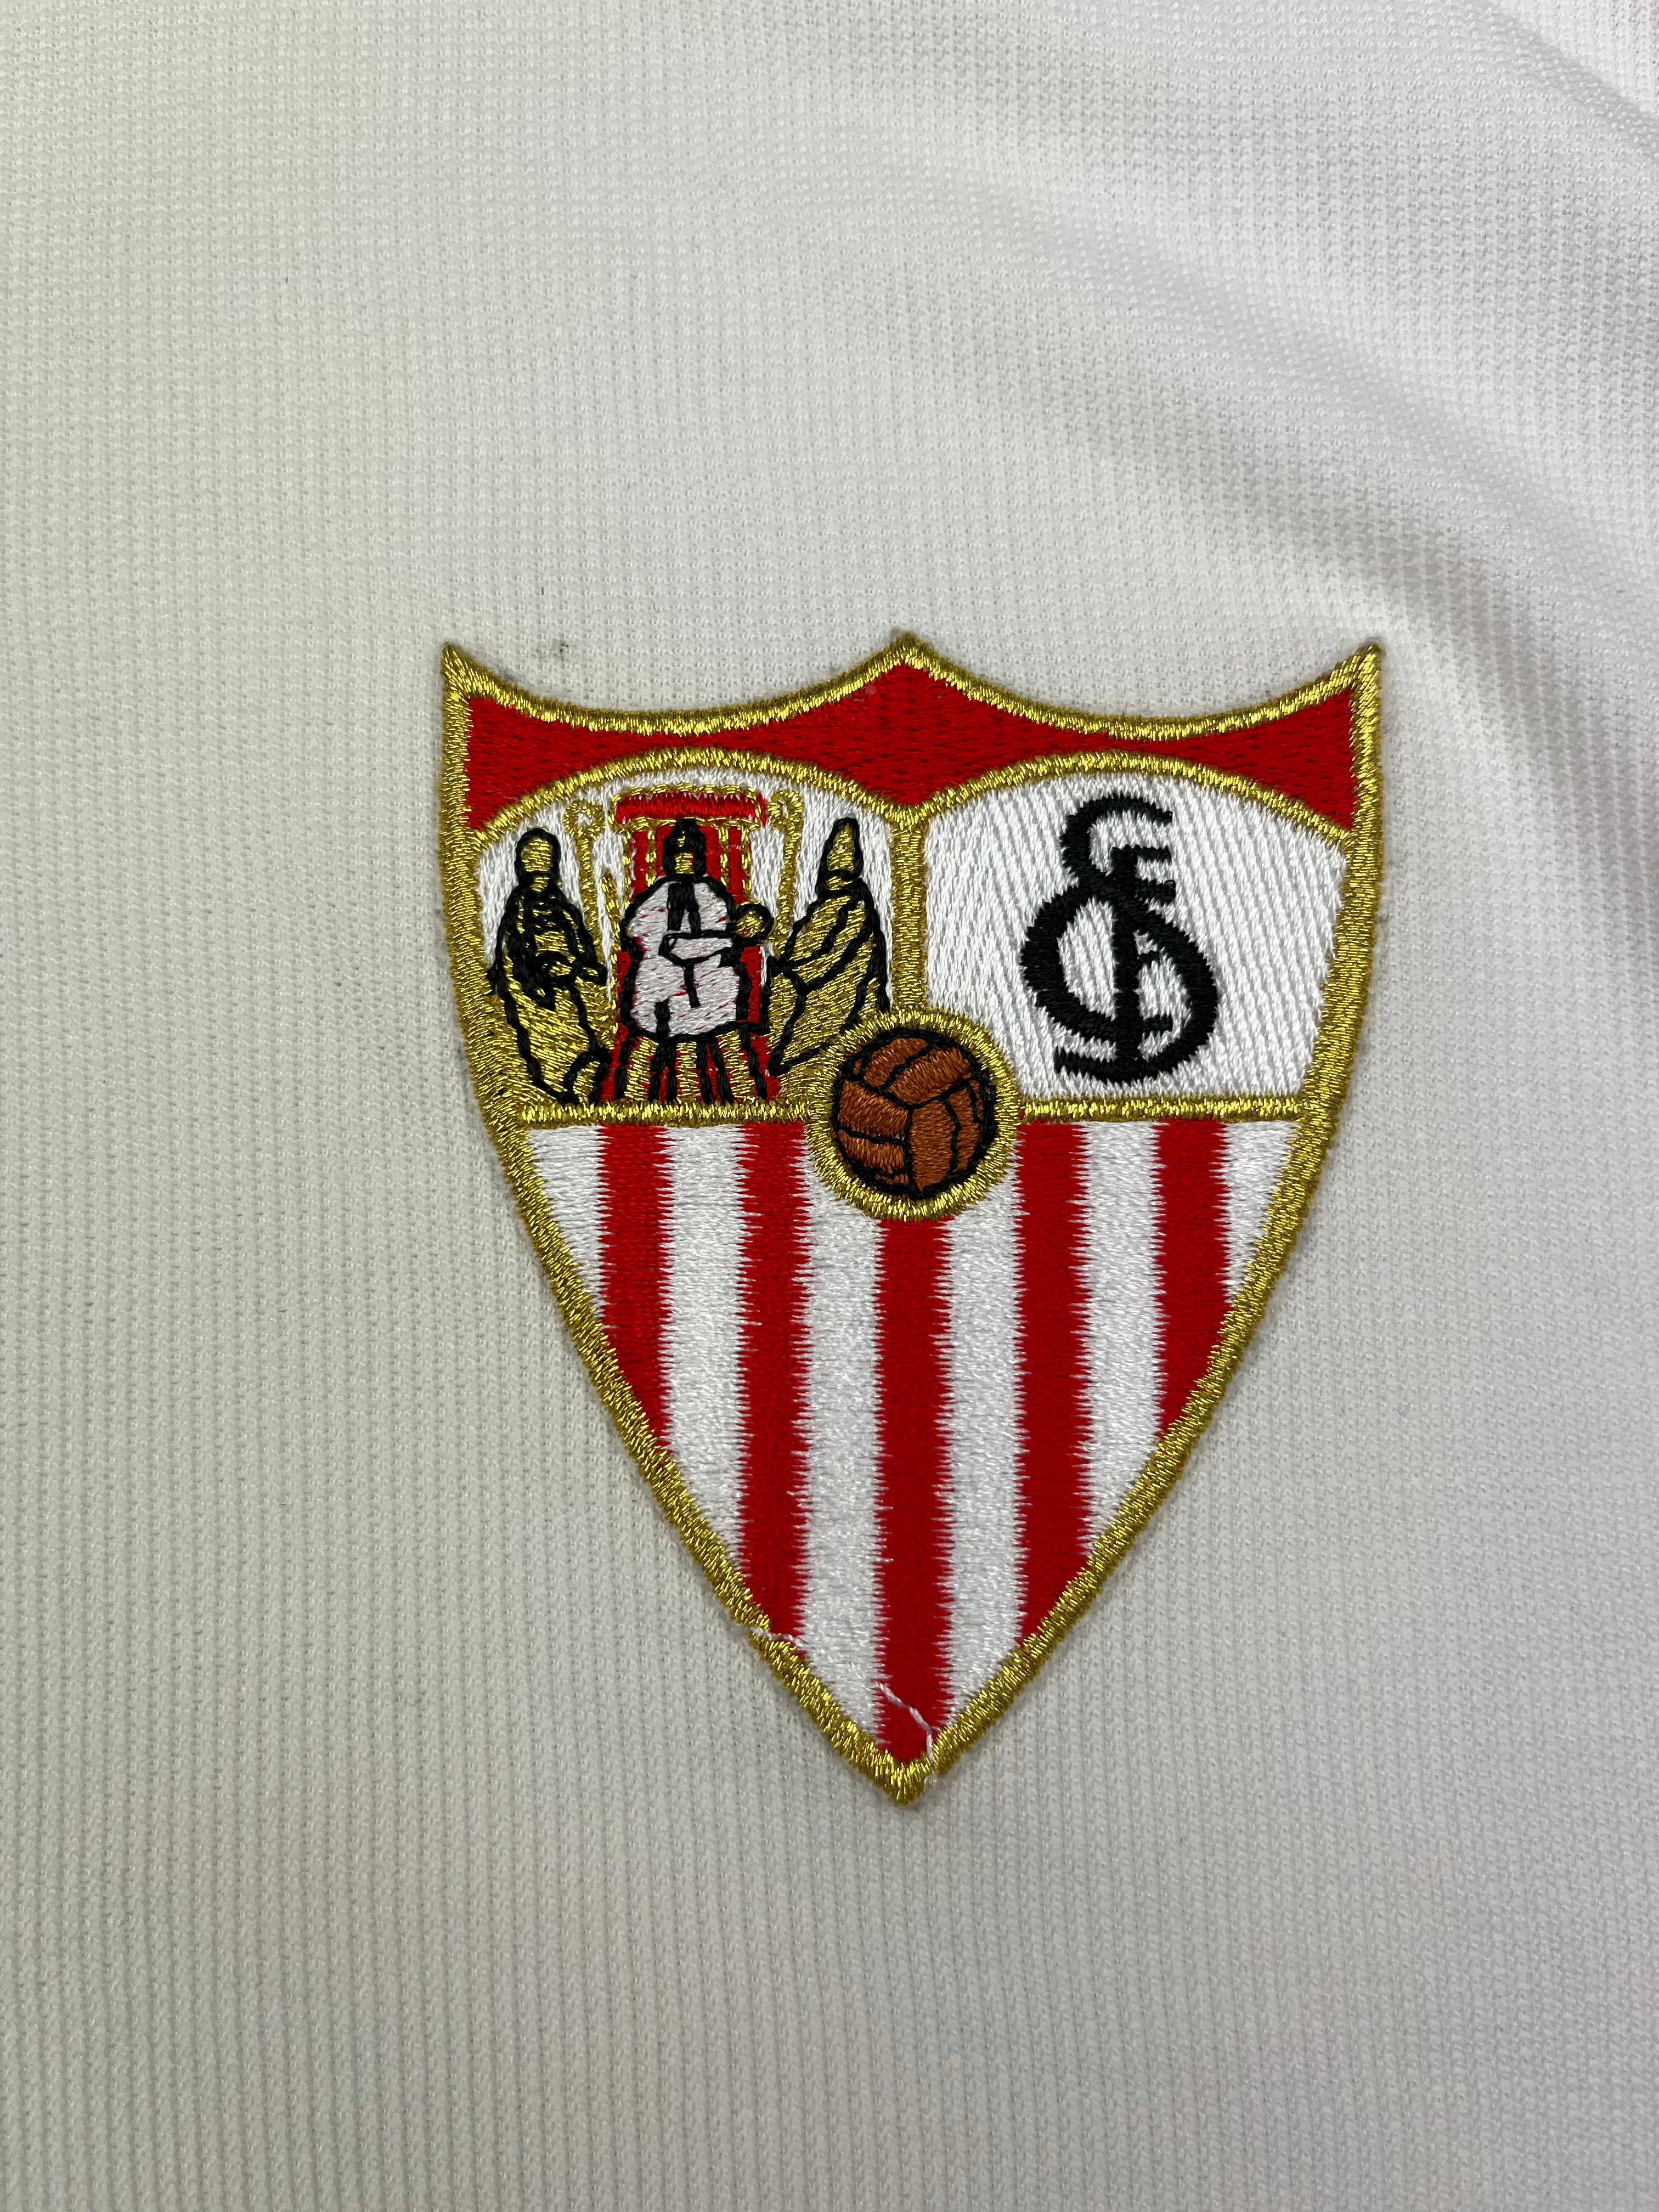 2004/05 Sevilla Home Shirt (S) 9/10